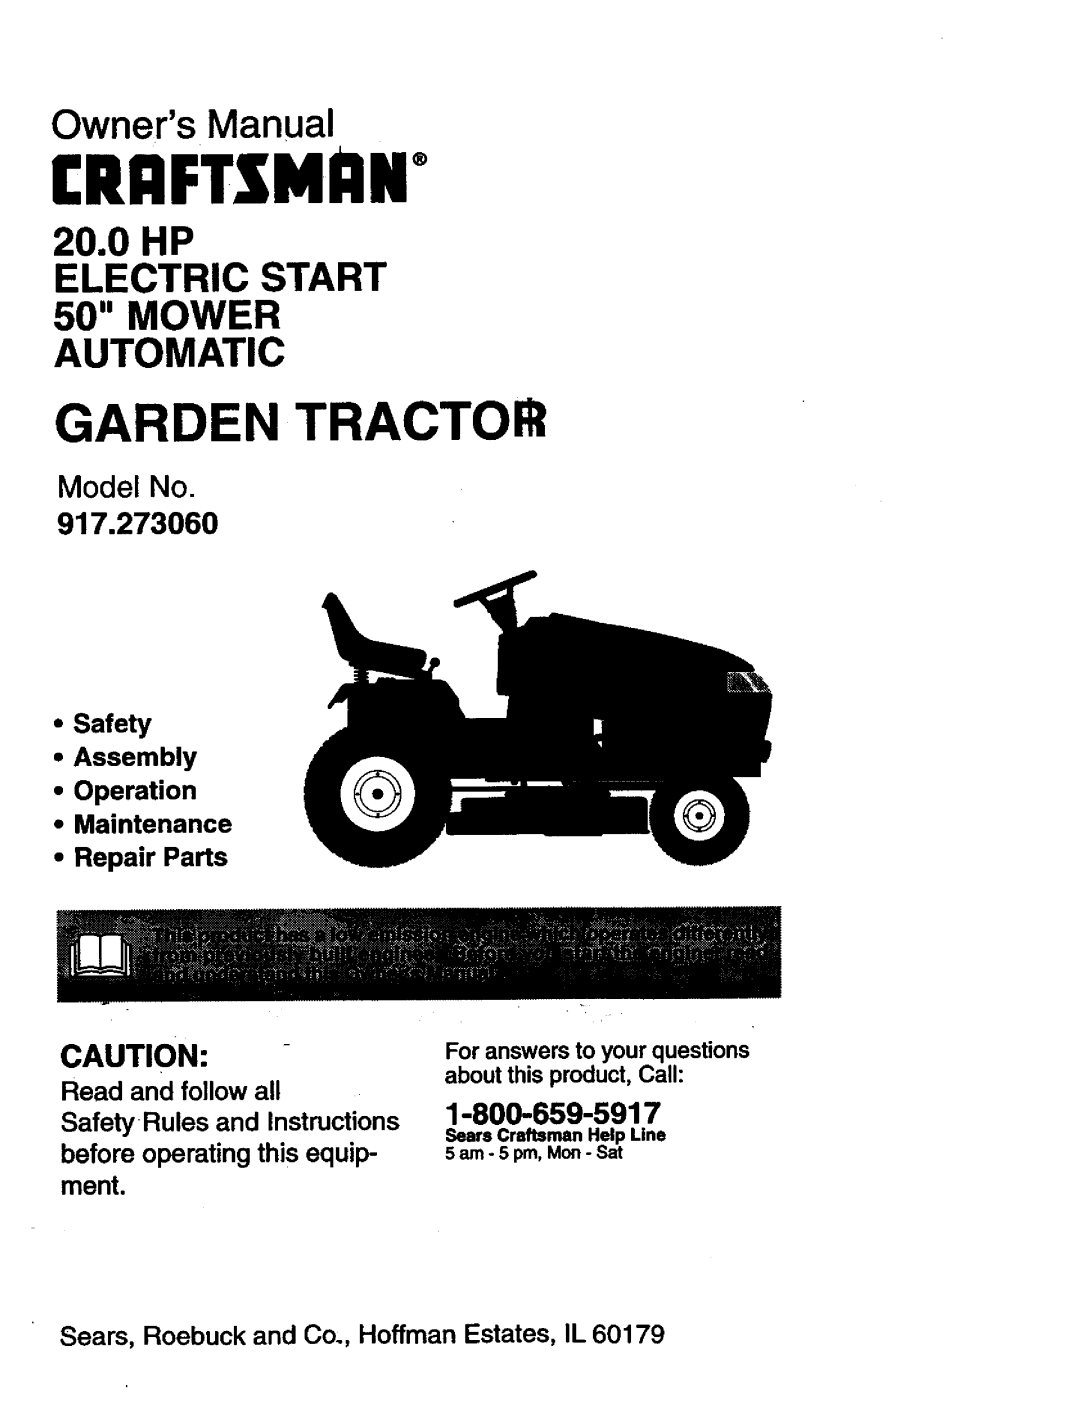 Craftsman 917.27306 owner manual CRnFTSMnNo, Model No, 1-800-659-5917, •Safety •Assembly •Operation •Maintenance 